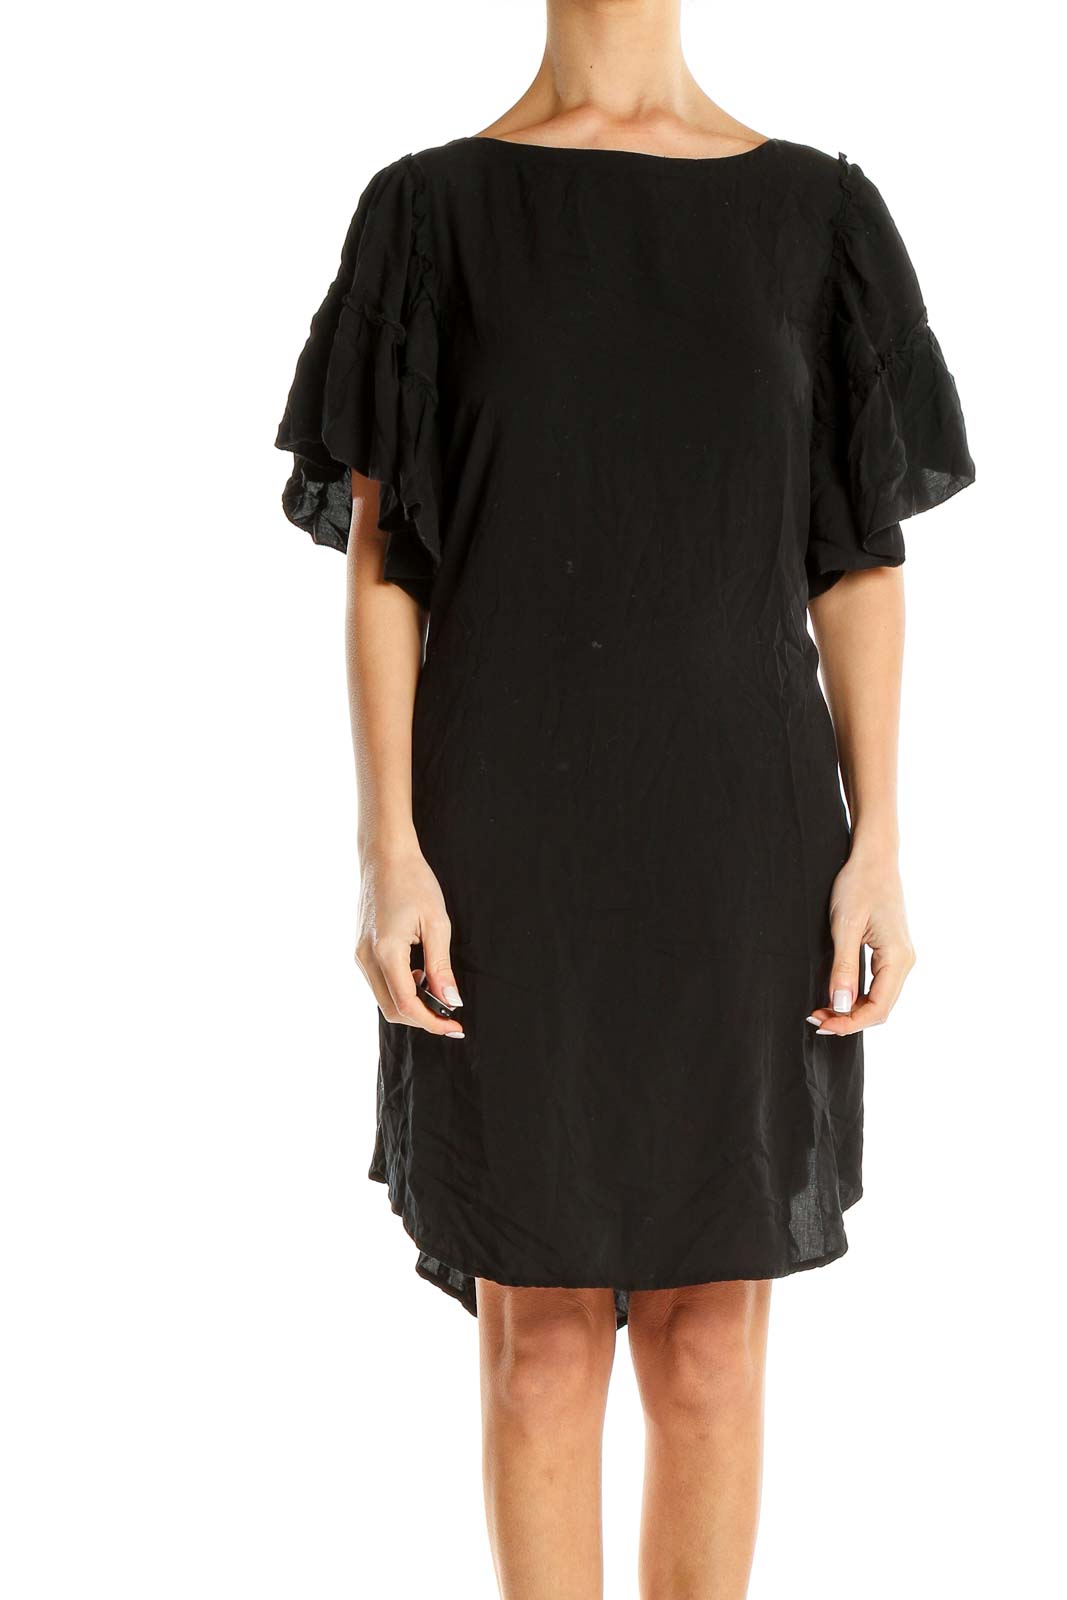 Ruffle Sleeve Black Shirt Dress Front